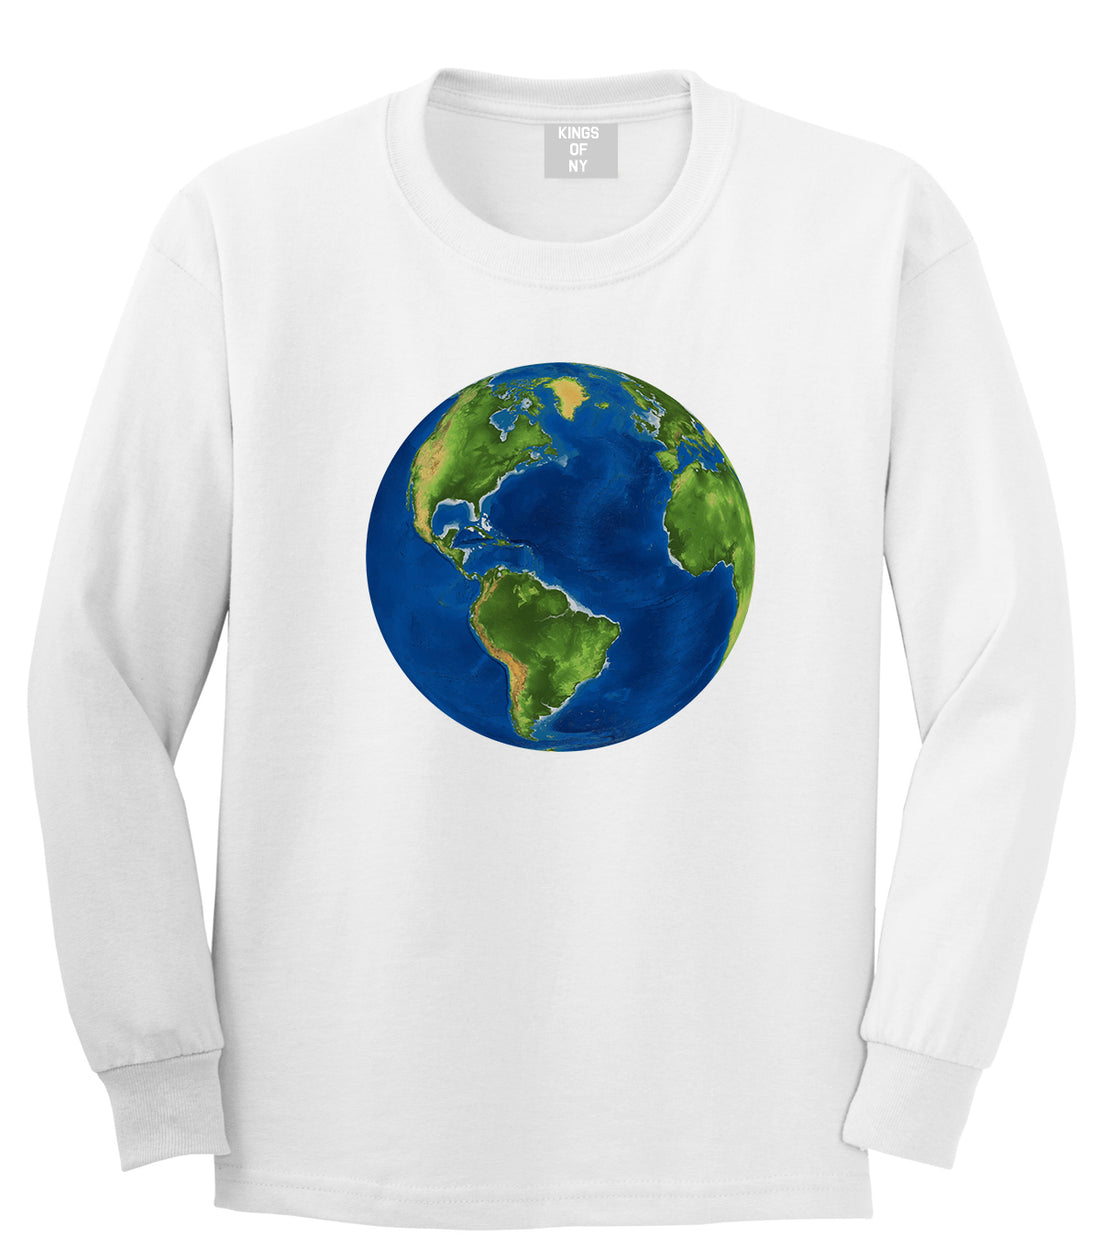 Earth Globe Mens White Long Sleeve T-Shirt by Kings Of NY